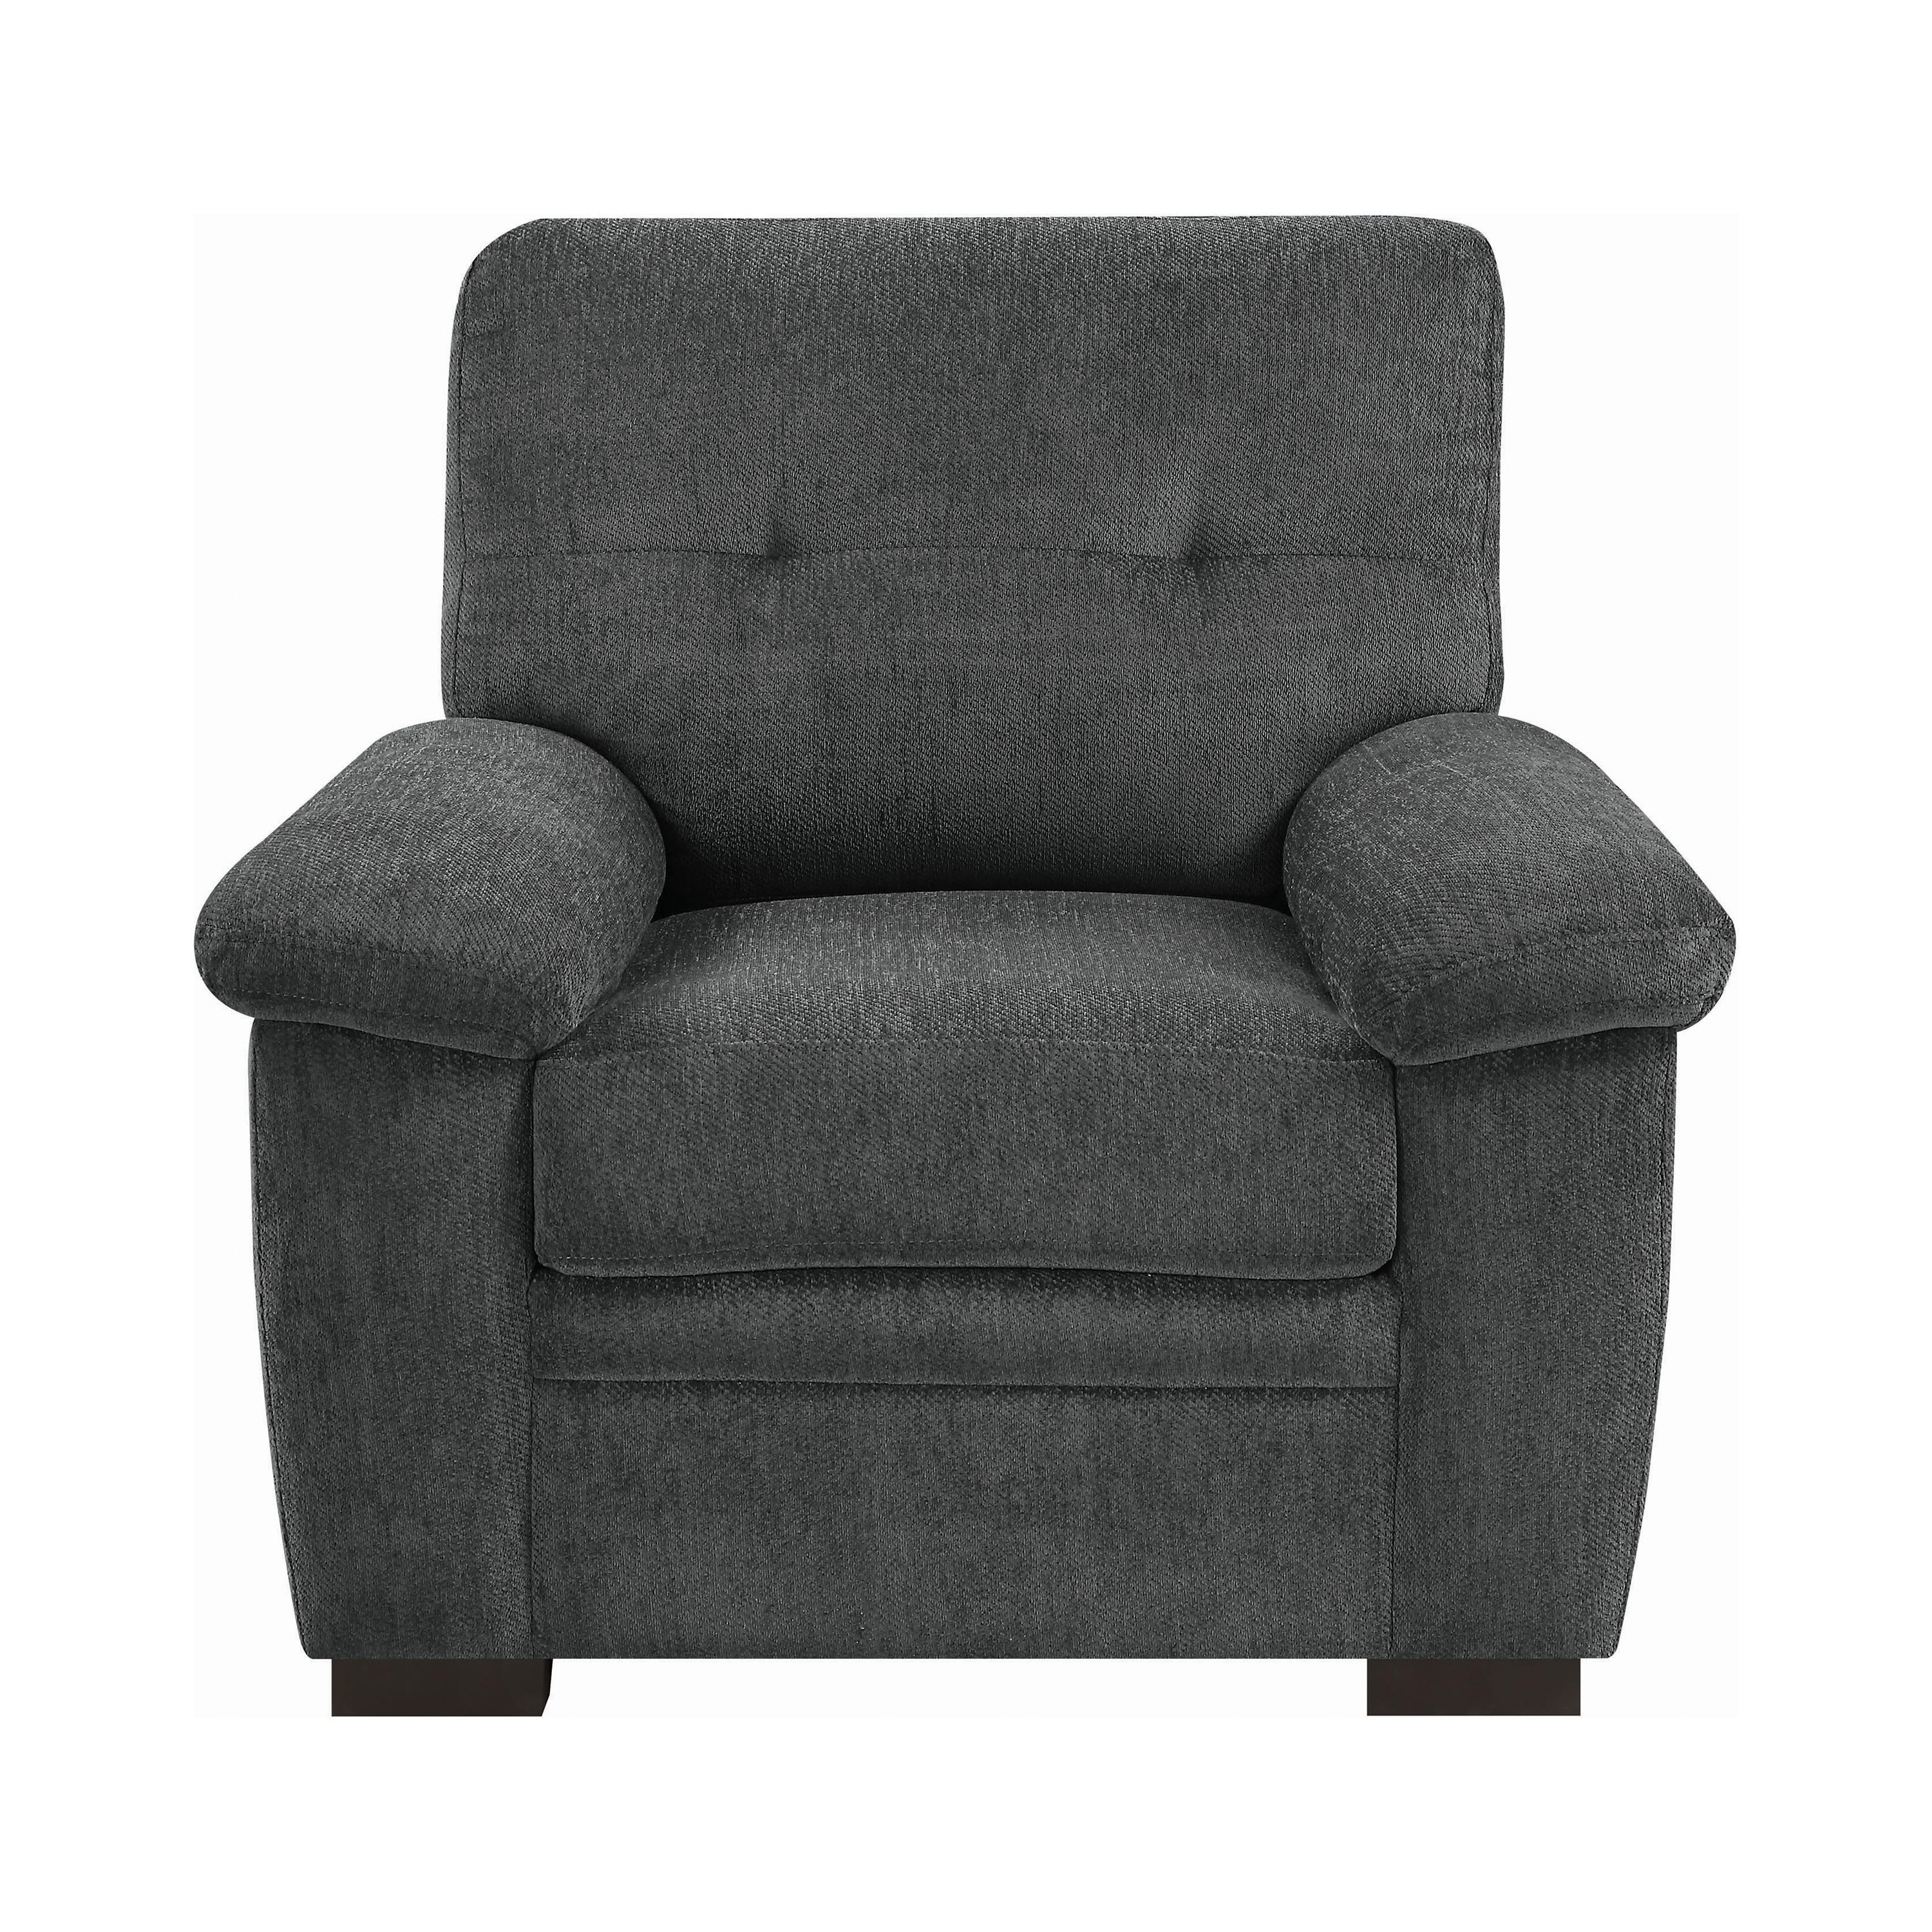 Casual Arm Chair 506586 Fairbairn 506586 in Charcoal Chenille